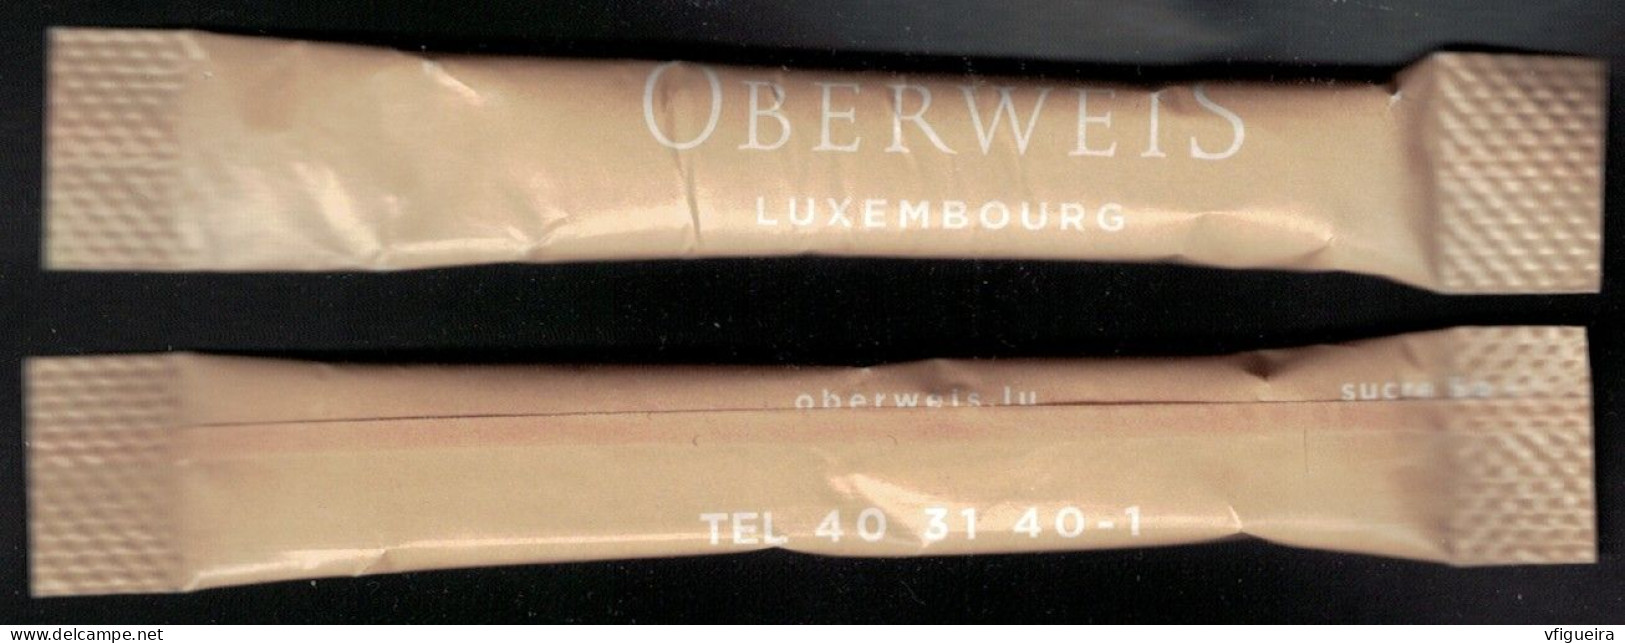 Luxembourg Sachet Sucre Sugar Bag Bûchette Oberweis Luxembourg - Suiker